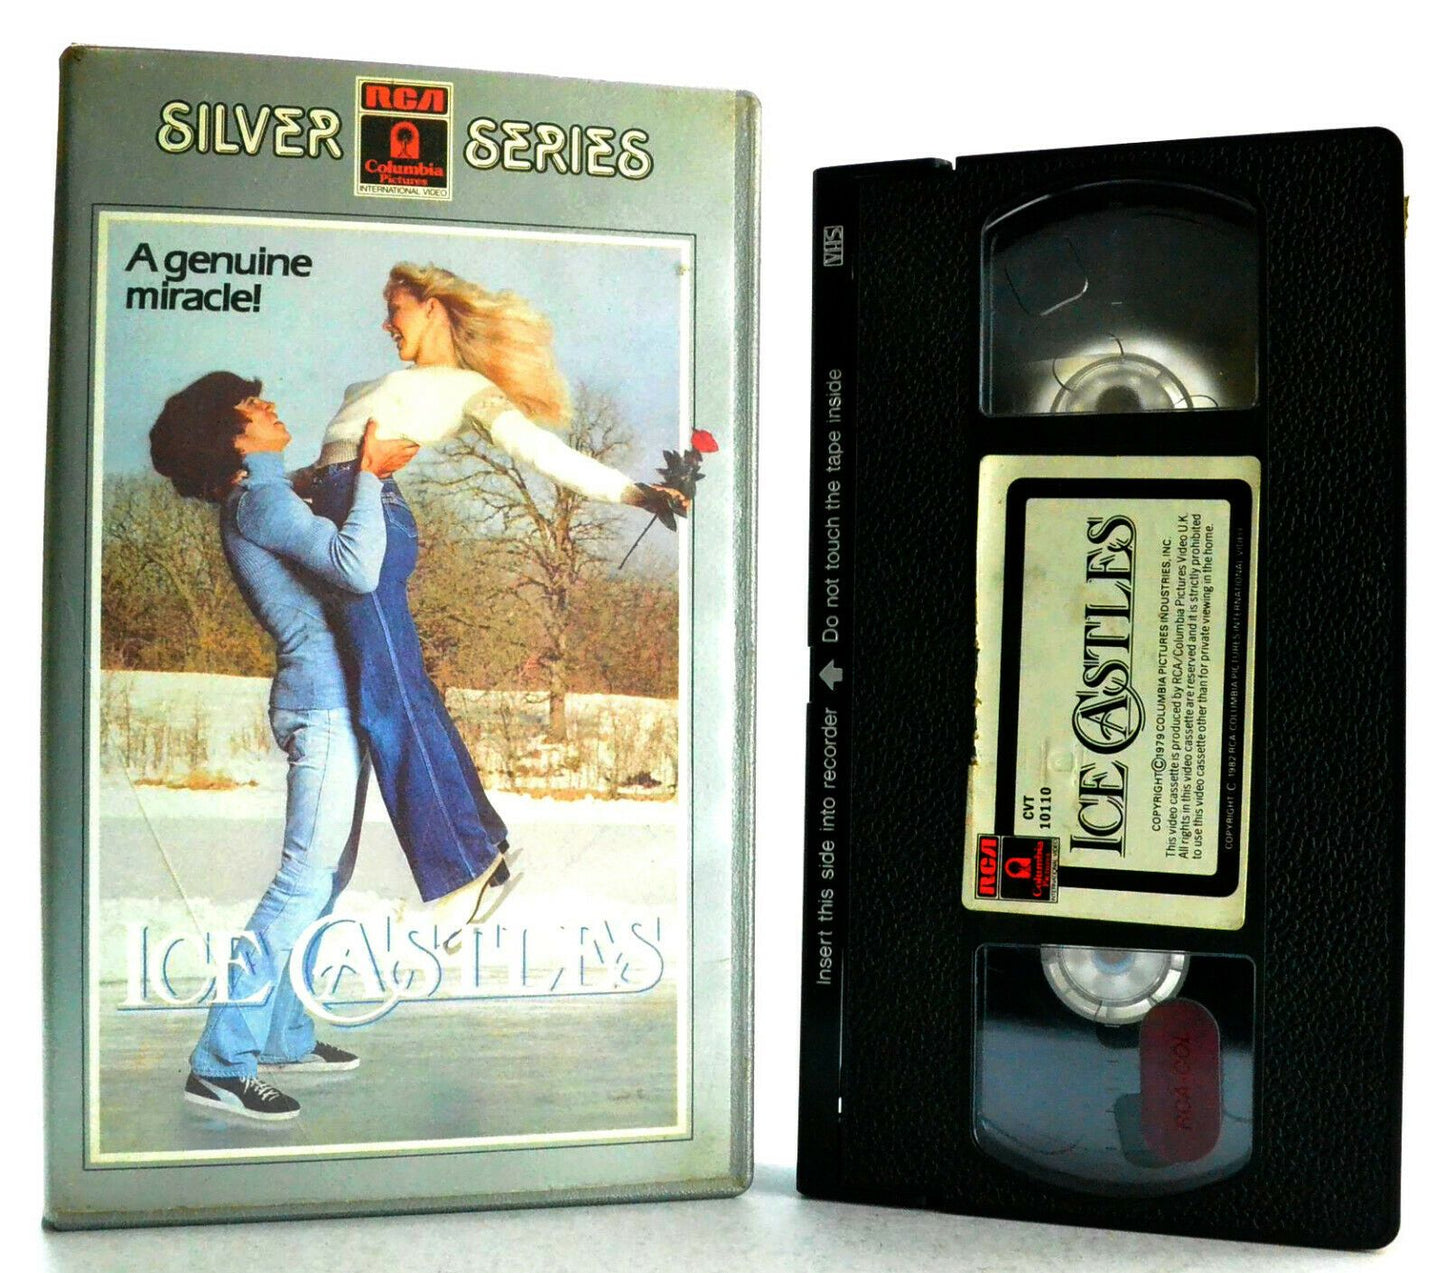 Ice Castles: World Class Figure Skating [RCA Silver Drama] Pre Cert - Pal VHS-